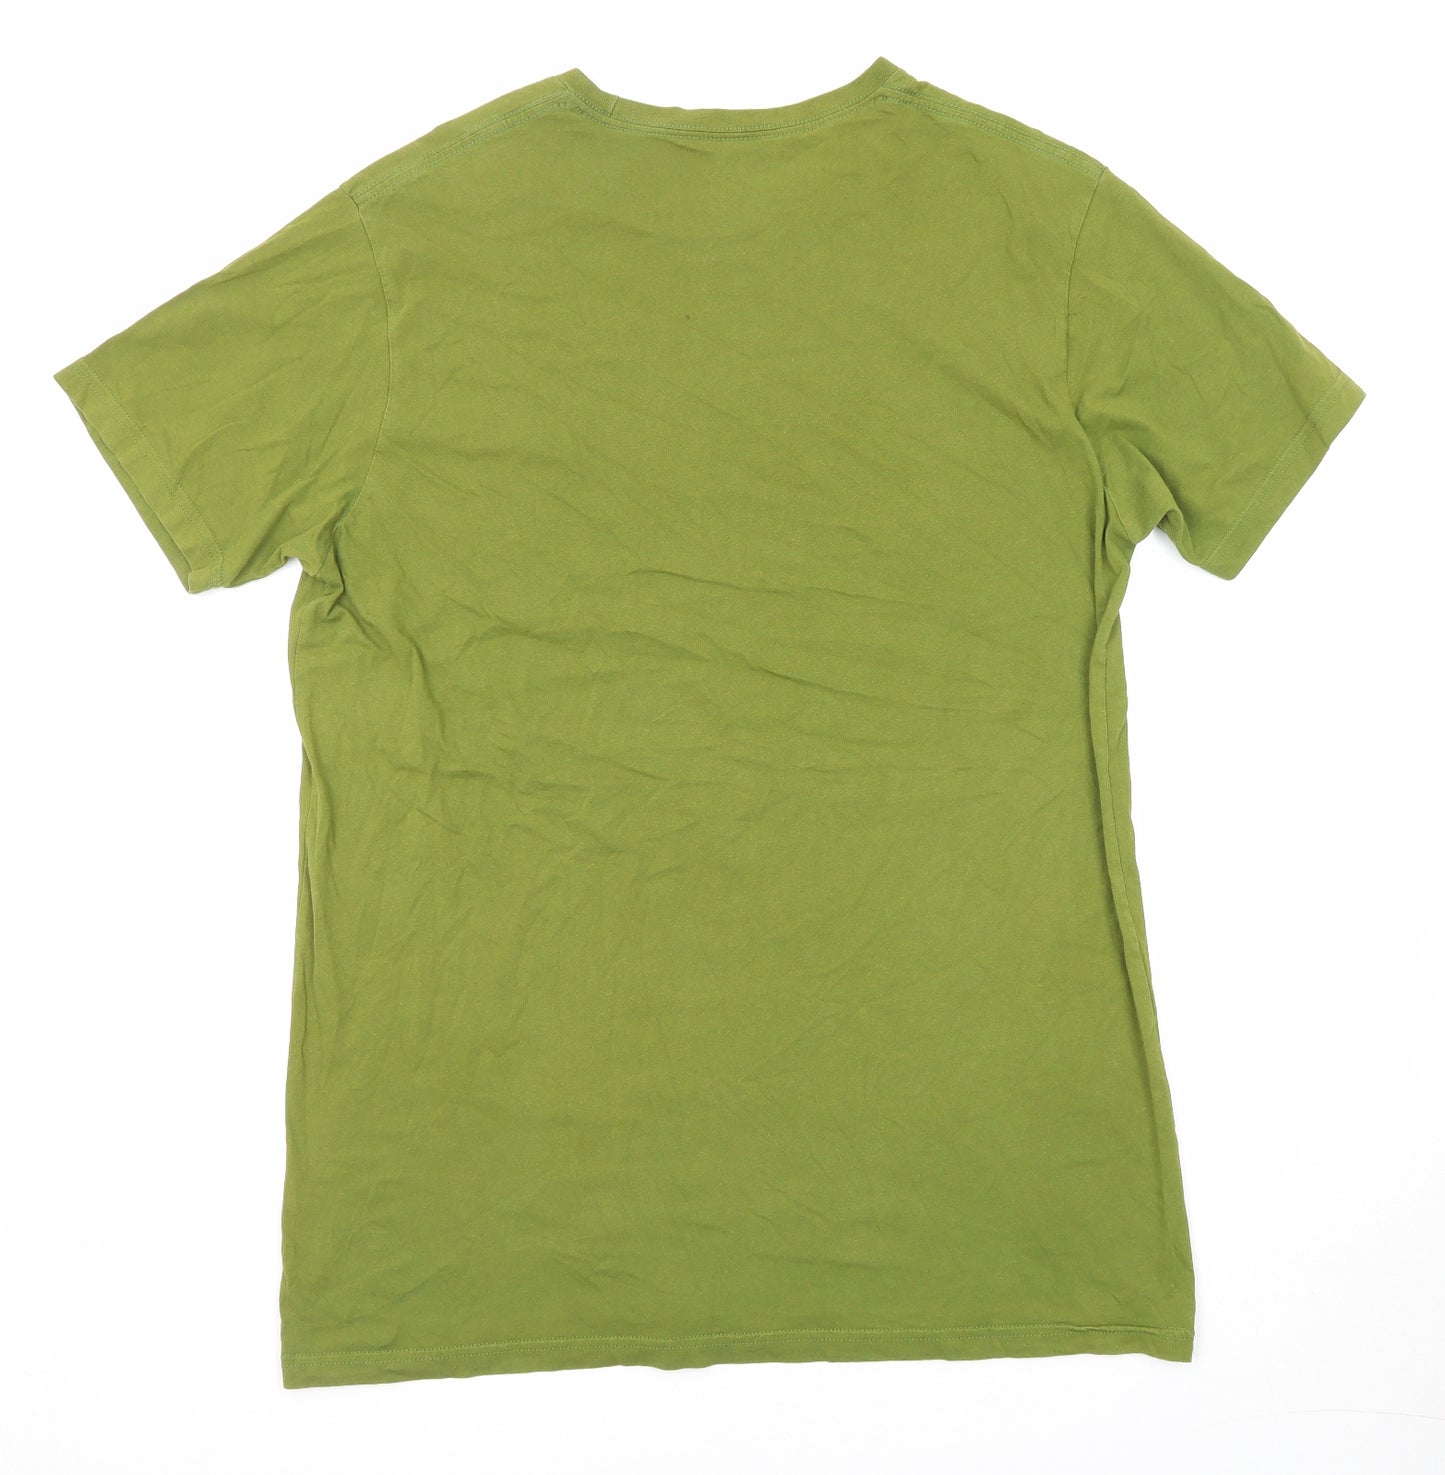 Patagonia Mens Green Cotton T-Shirt Size L Round Neck